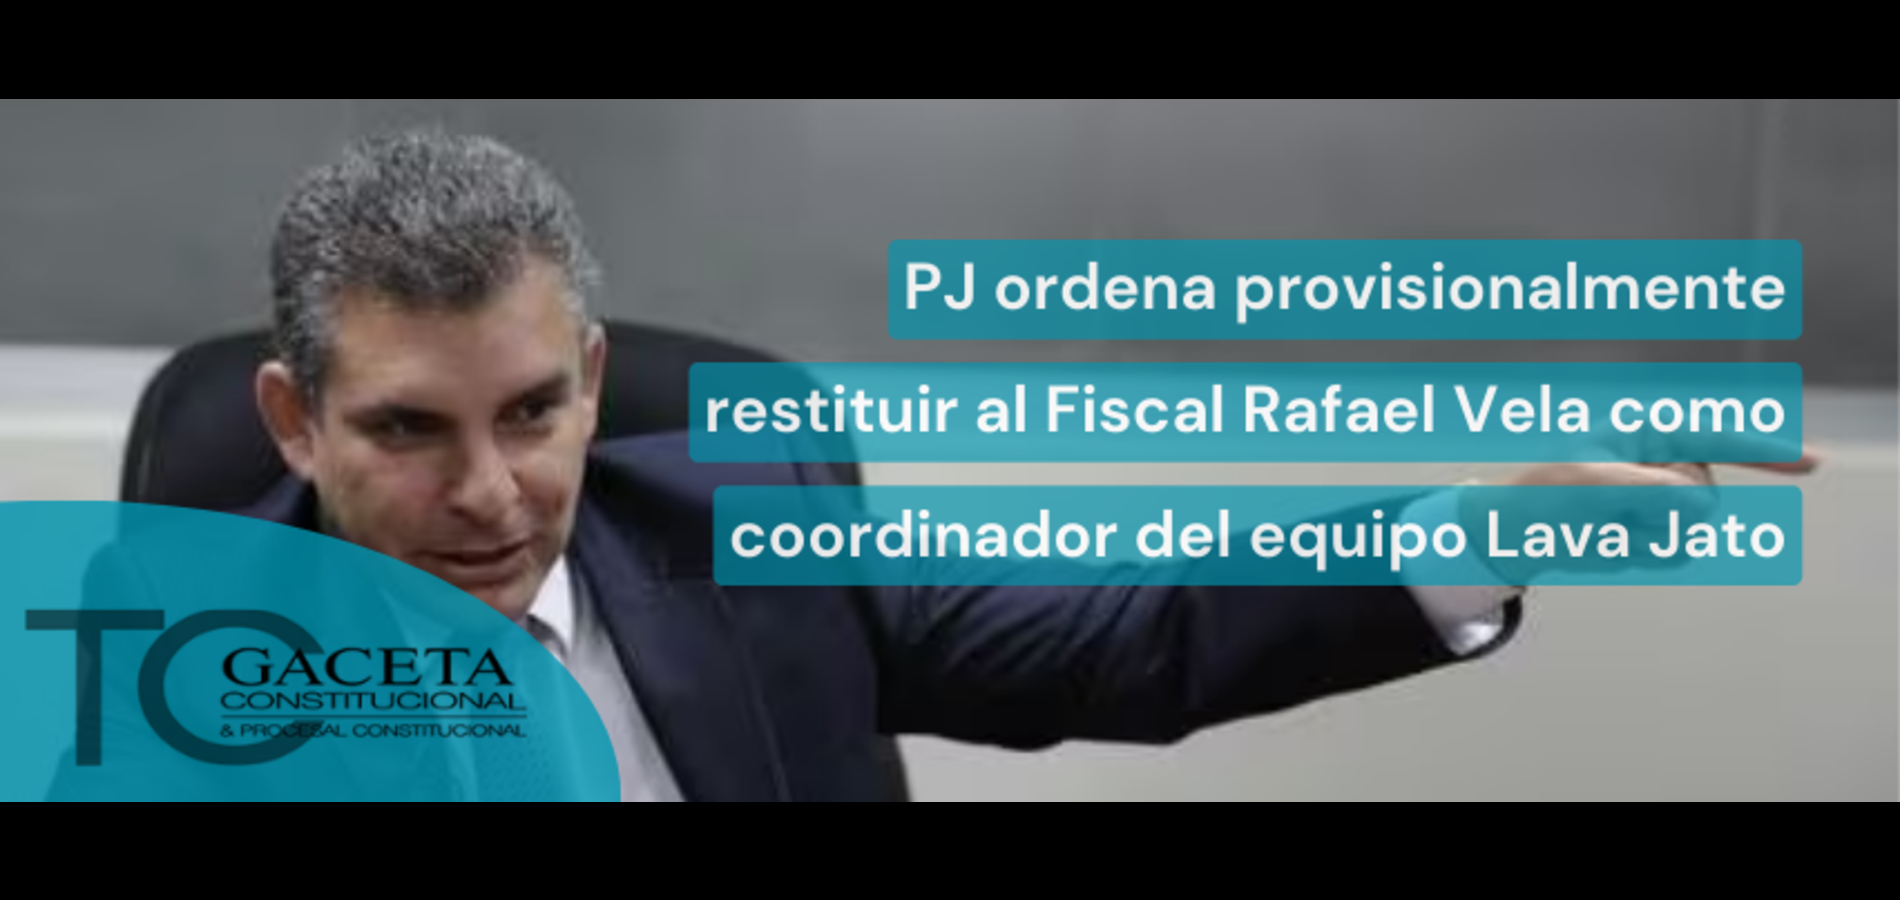 PJ ordena provisionalmente restituir al fiscal Rafael Vela como coordinador del equipo Lava Jato